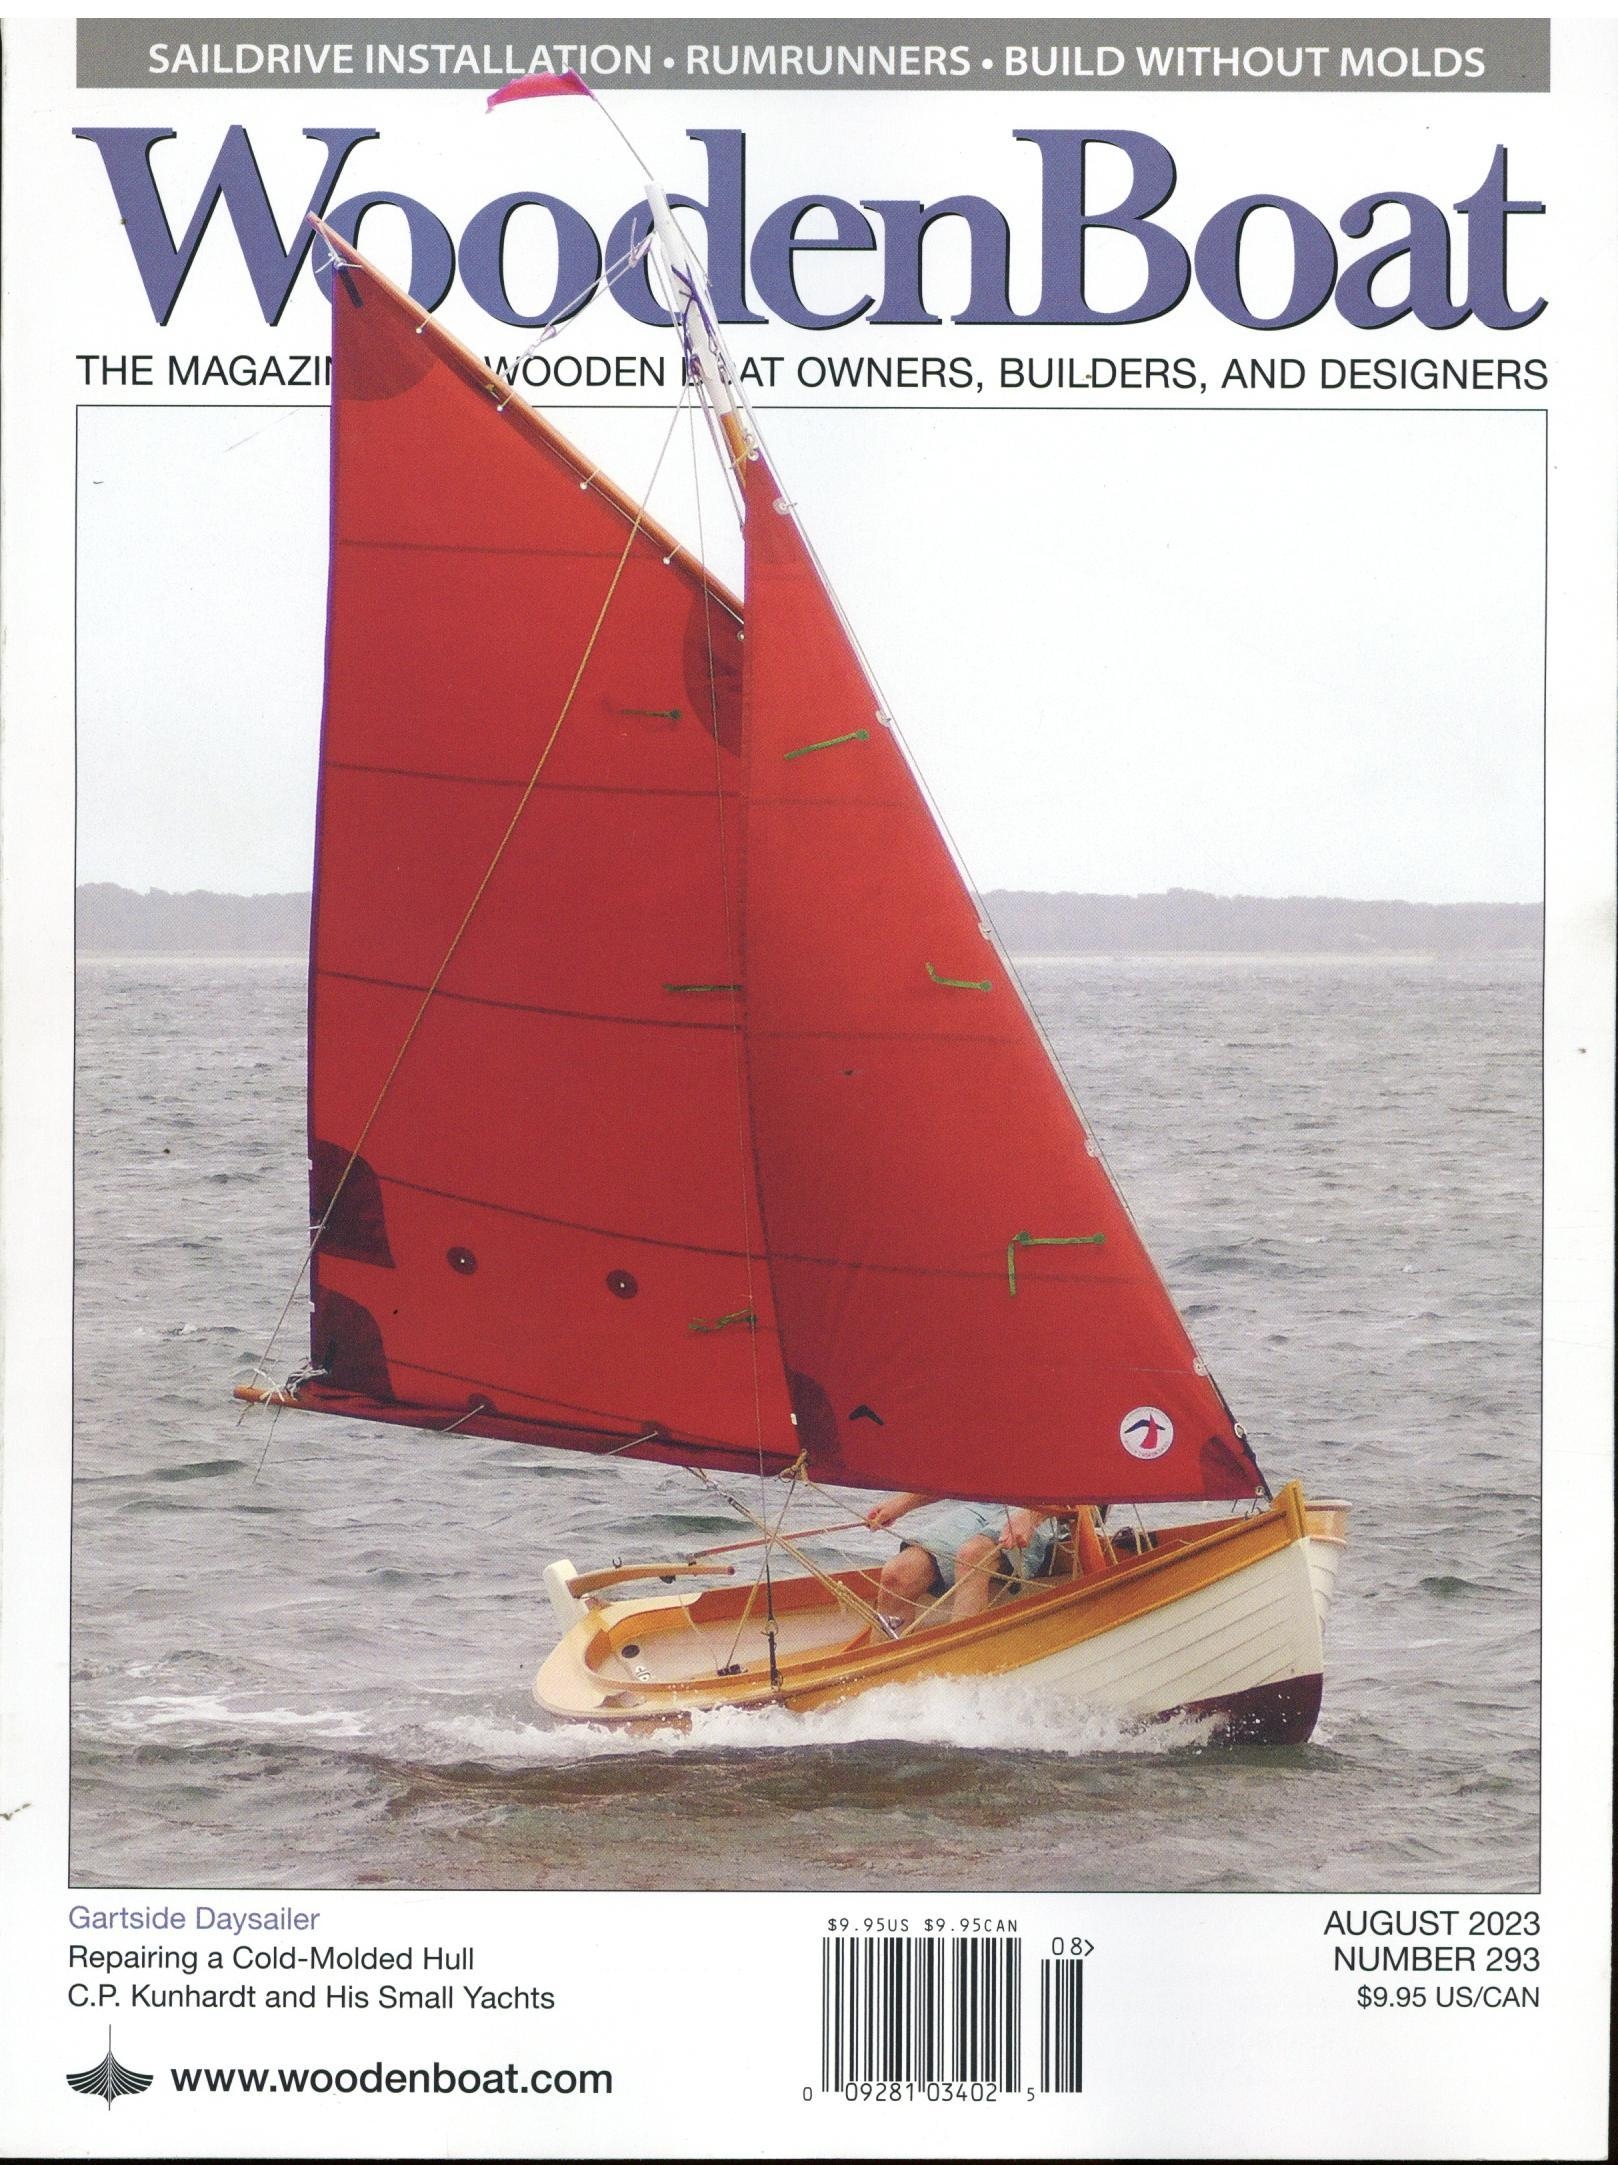 Woodenboat